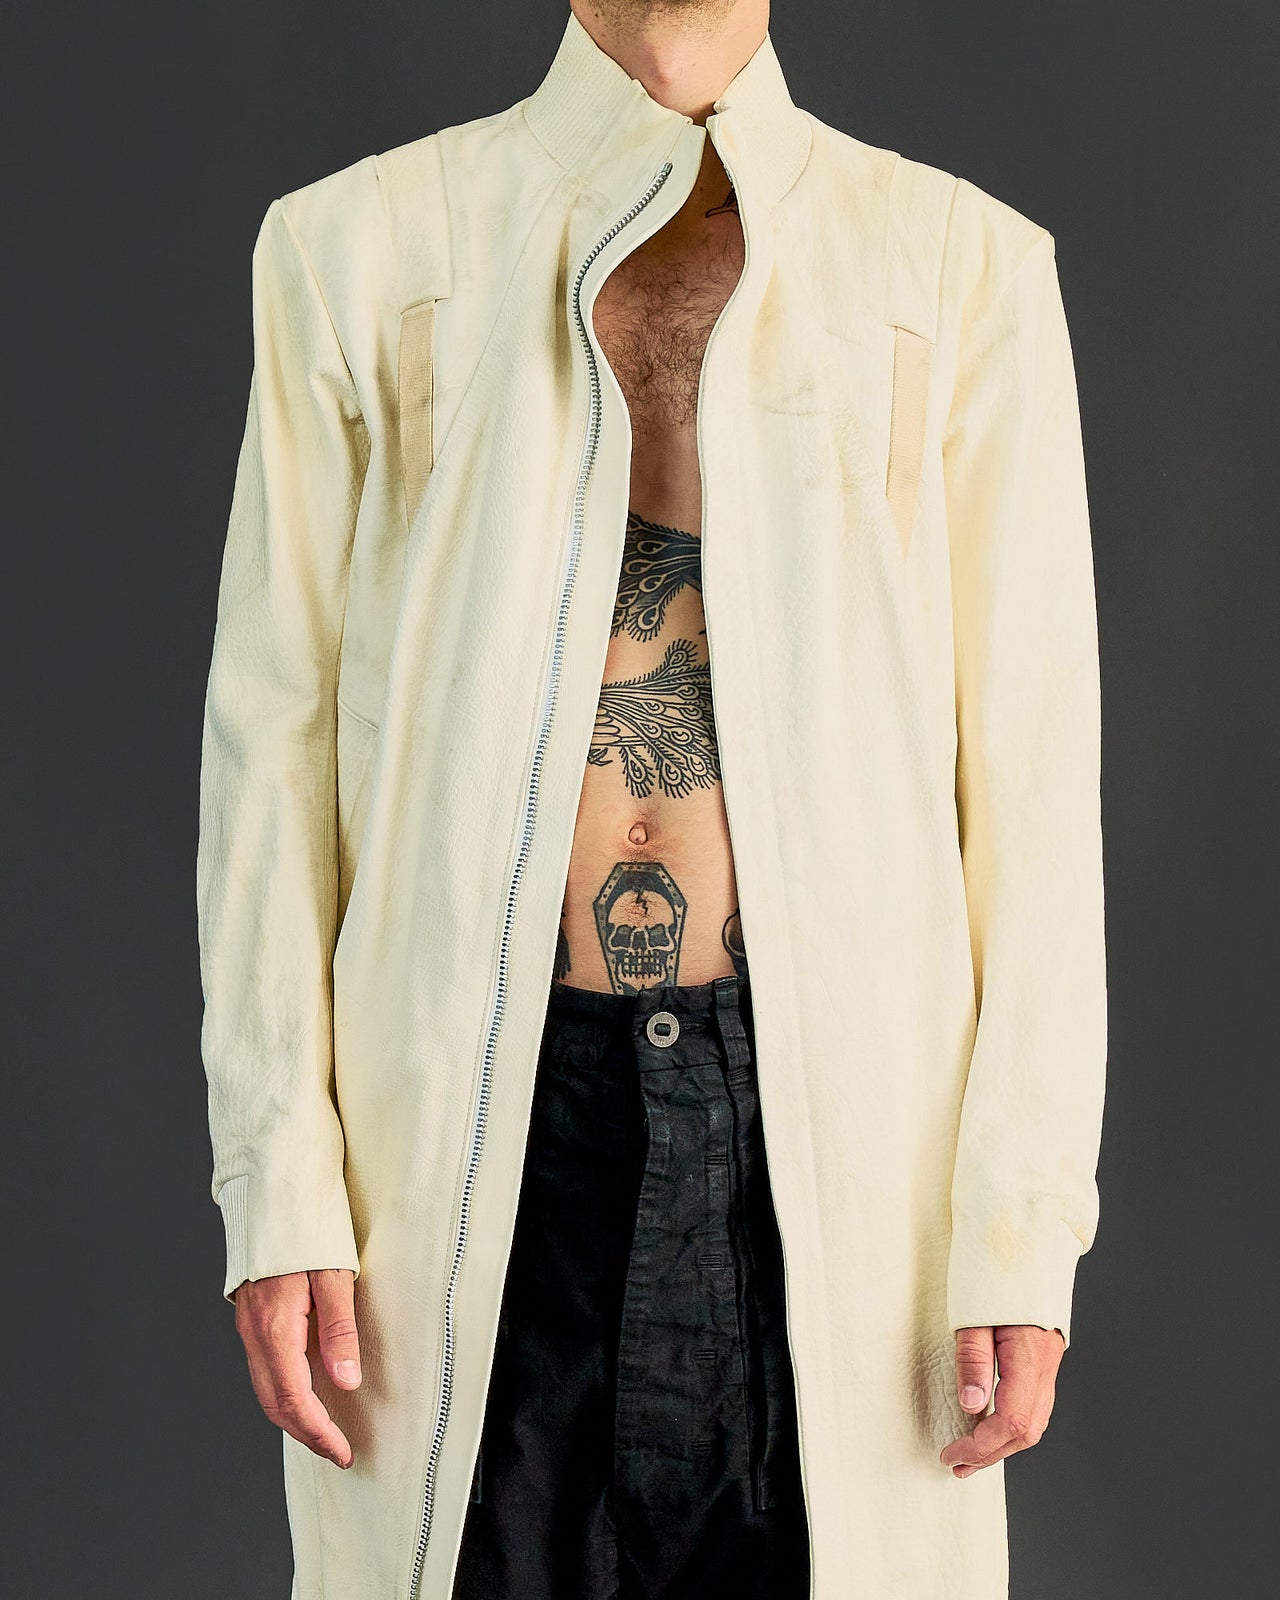 Boris Bidjan Saberi AW 2016 Yak leather long line zip jacket